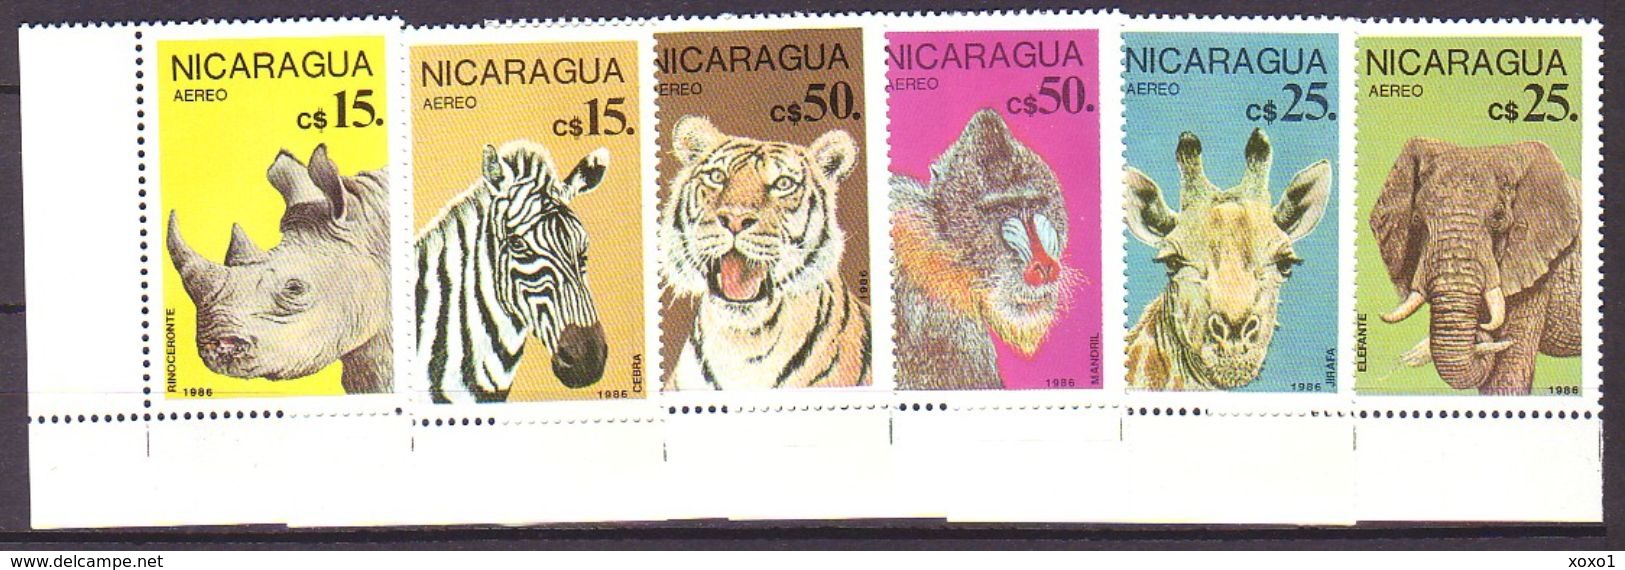 Nicaragua 1986 MiNr. 2711 - 2716 Animals Tiere 6v MNH** 6,00 € - Rhinoceros